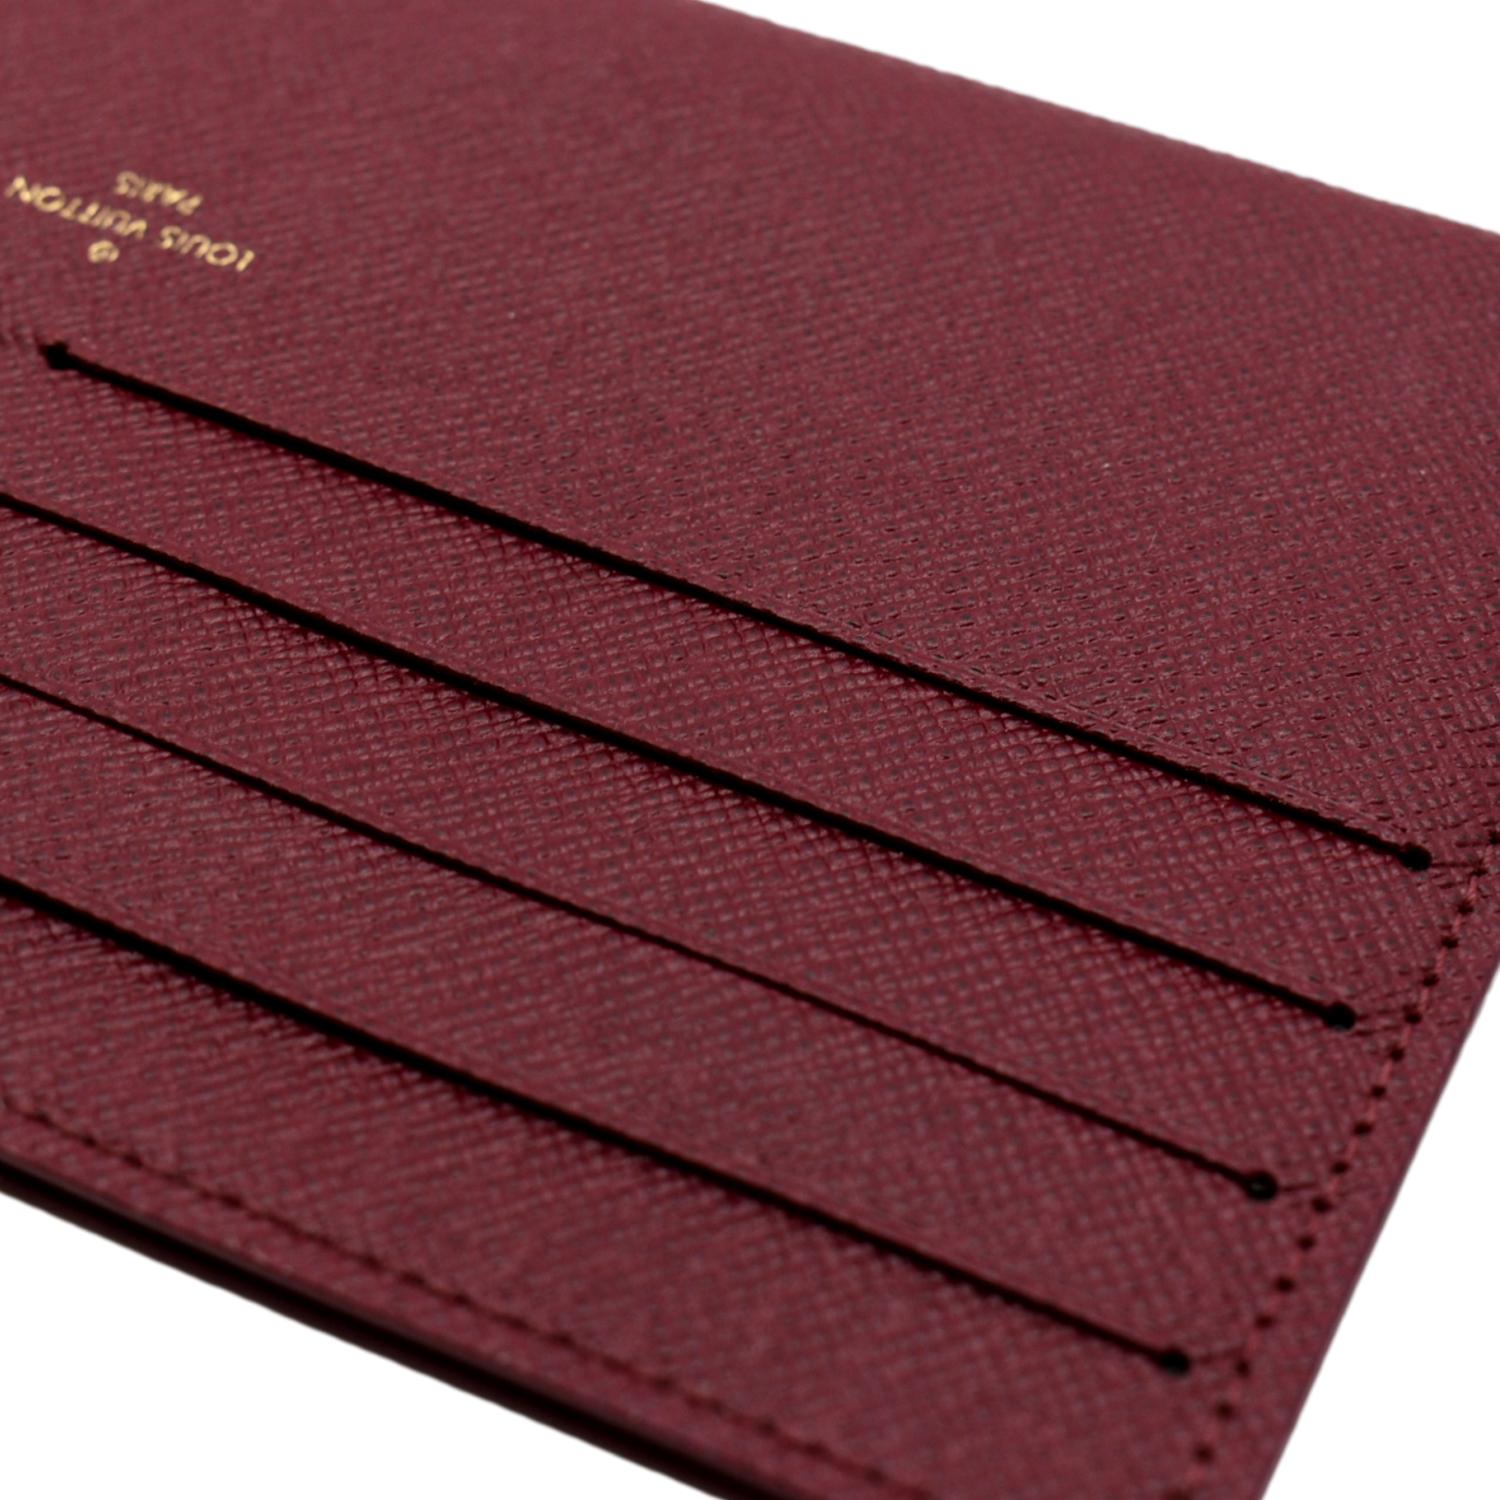 Louis Vuitton Felicie Card Holder Insert Leather